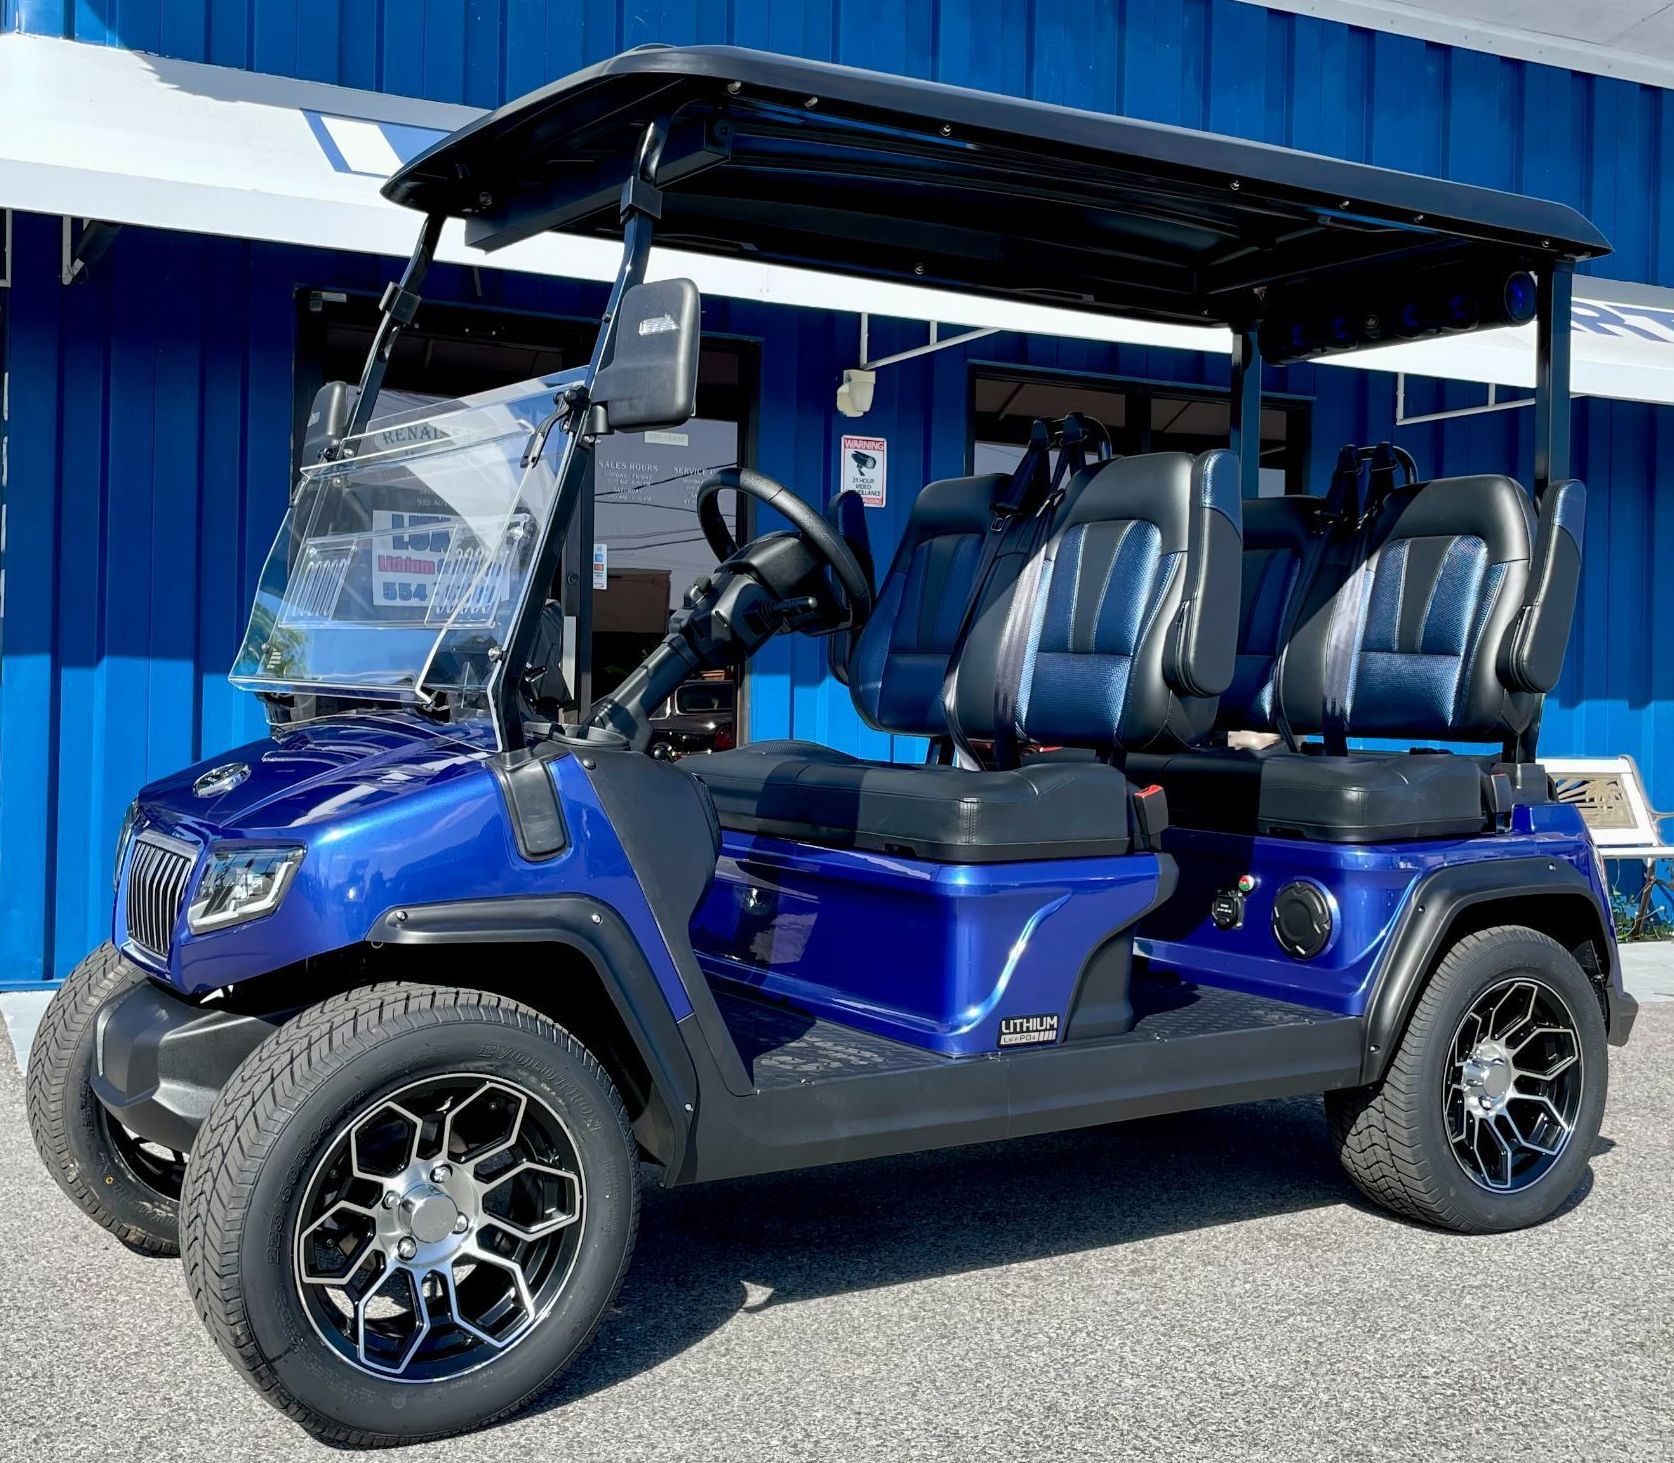 Blue golf car - golf cars for sale in St. Petersburg, FL